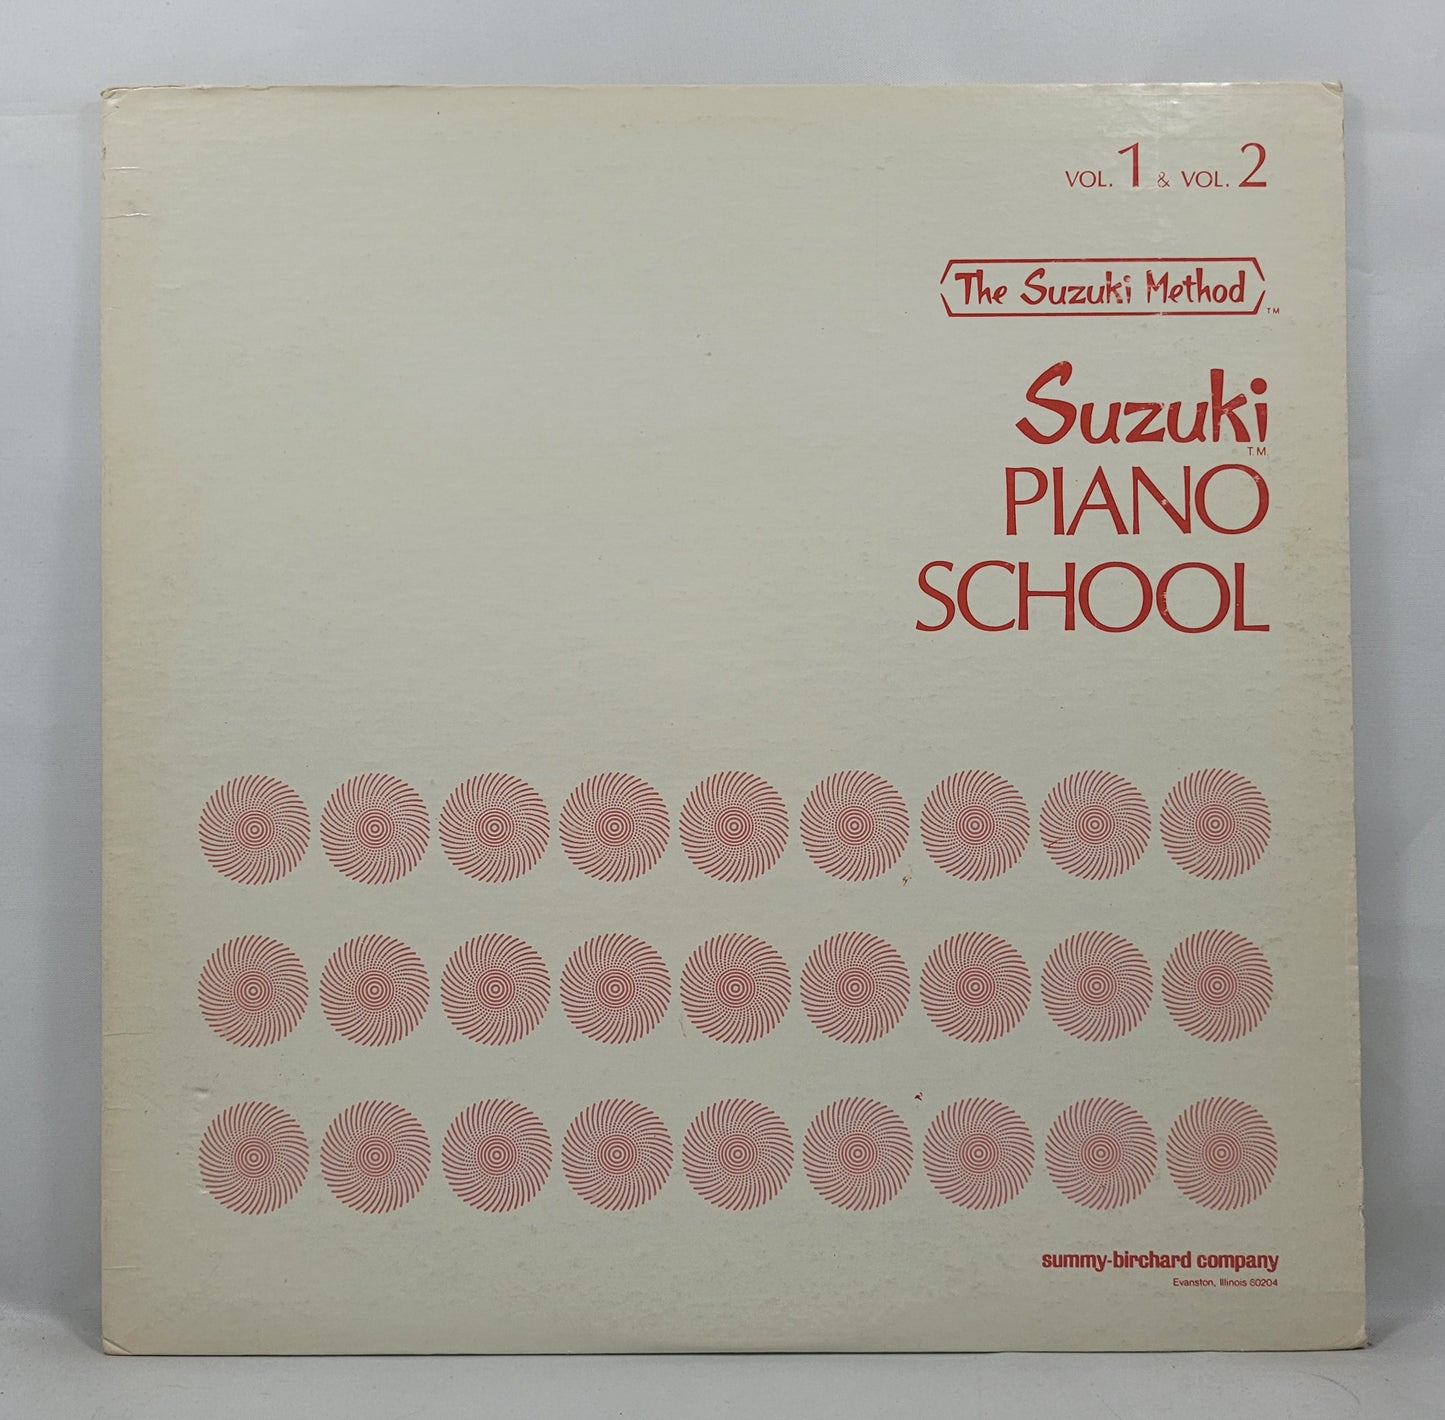 Meiko Miyazawa - Suzuki Piano School, Vol. 1 & Vol. 2 [Used Vinyl Record LP]